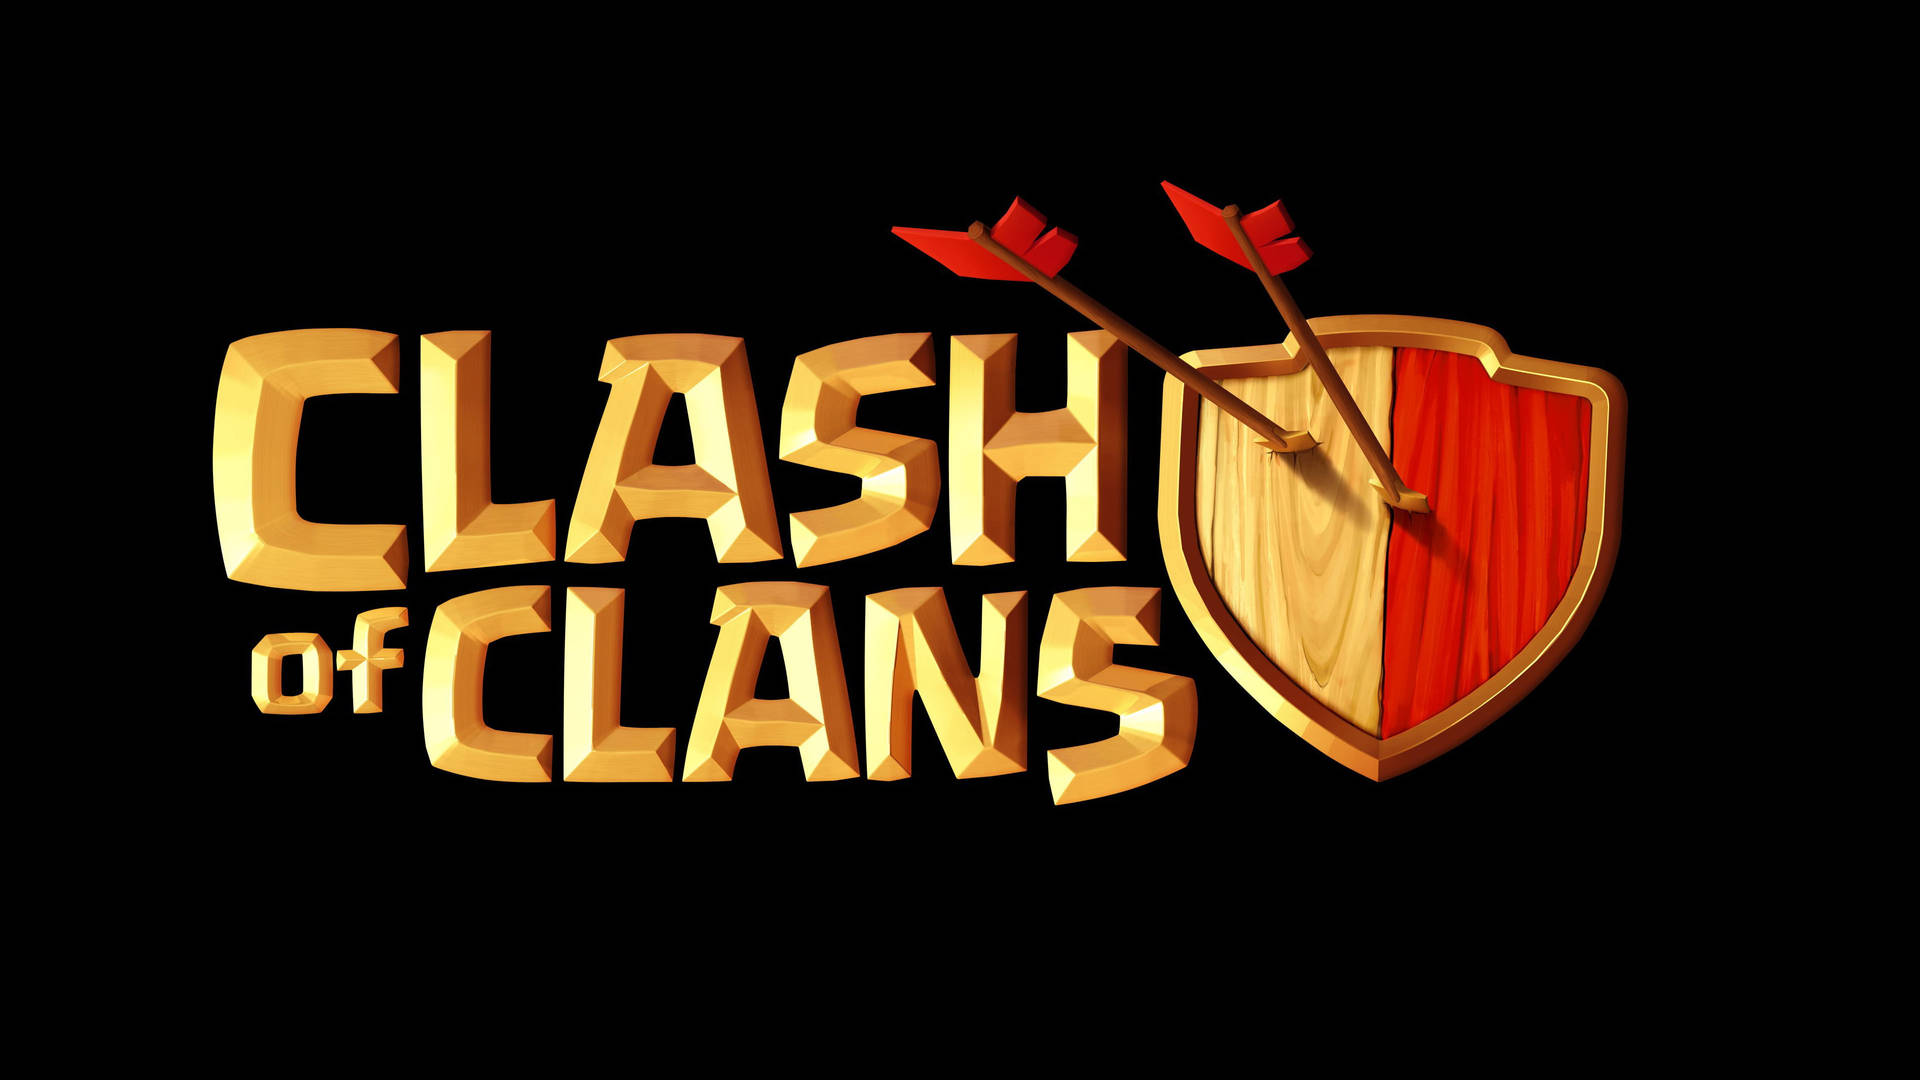 Clash Of Clans Gaming Logo Wallpaper